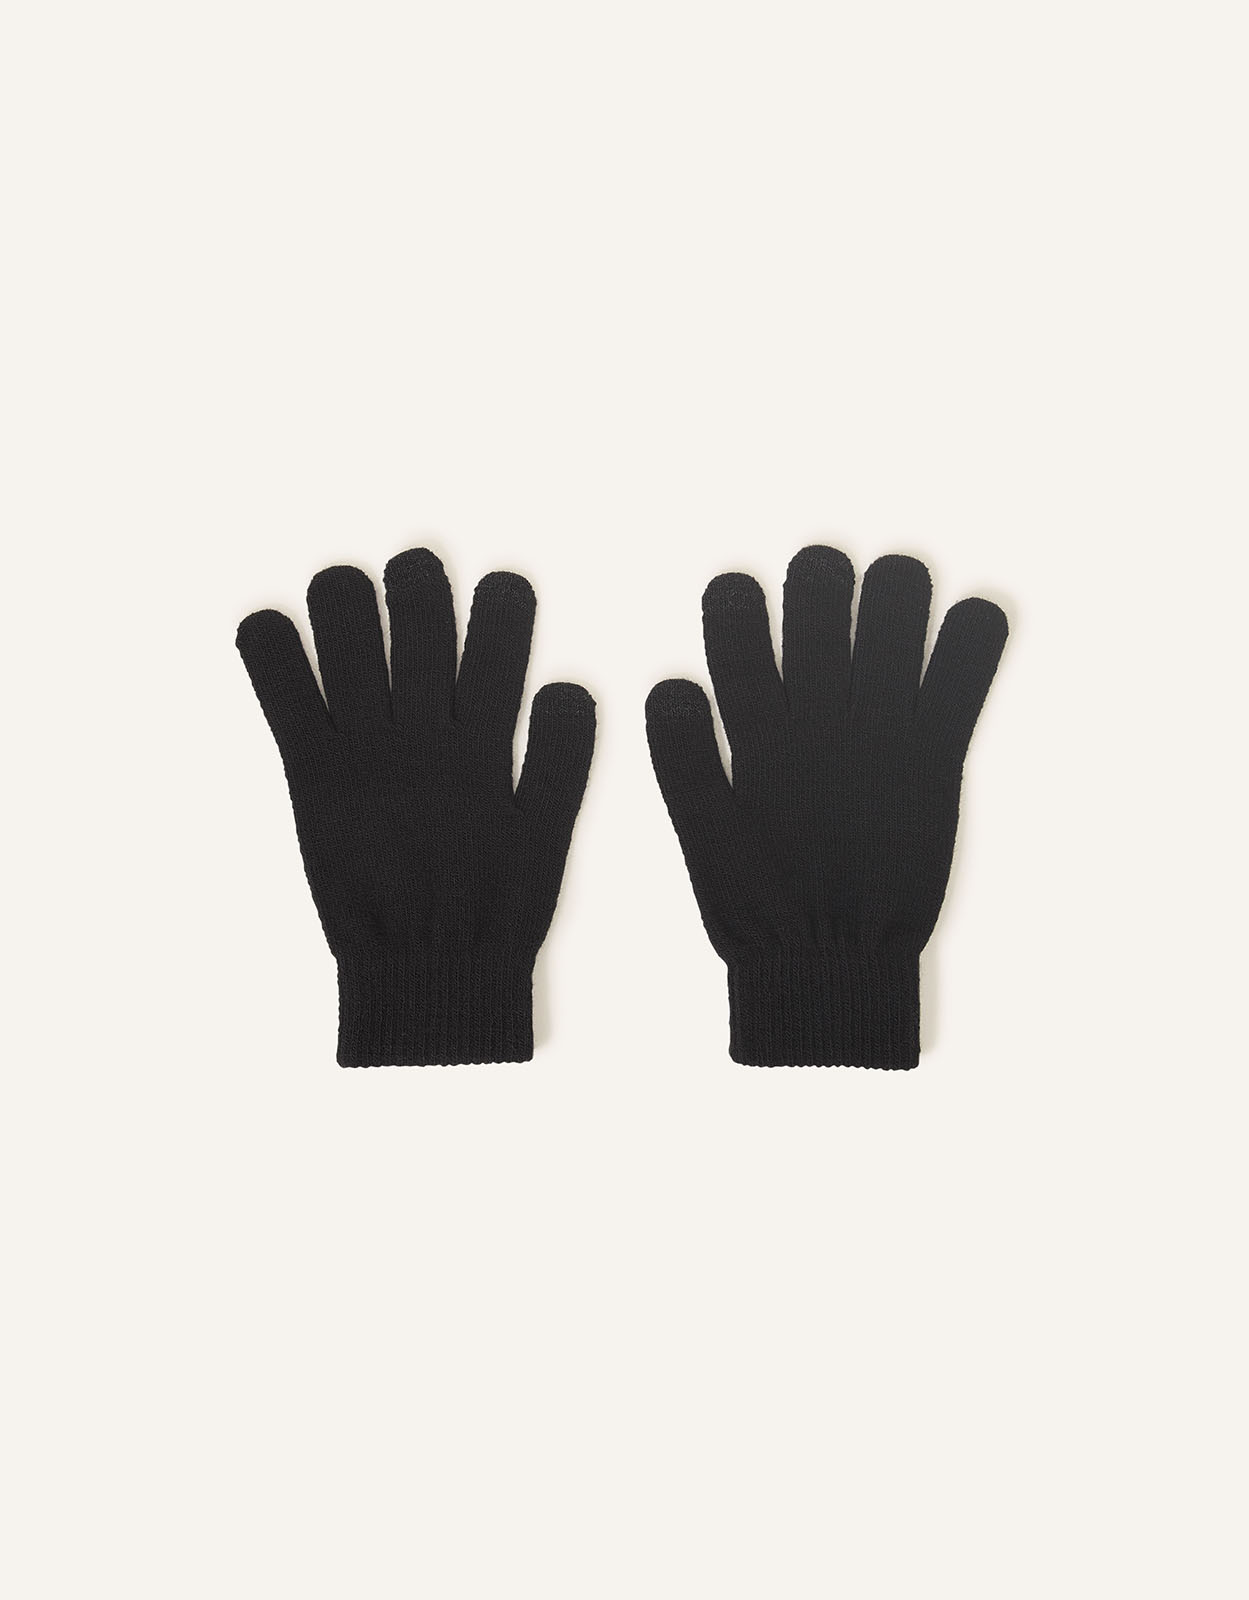 Accessorize Women's Stretch Touchscreen Gloves Set, Size: 20x9cm